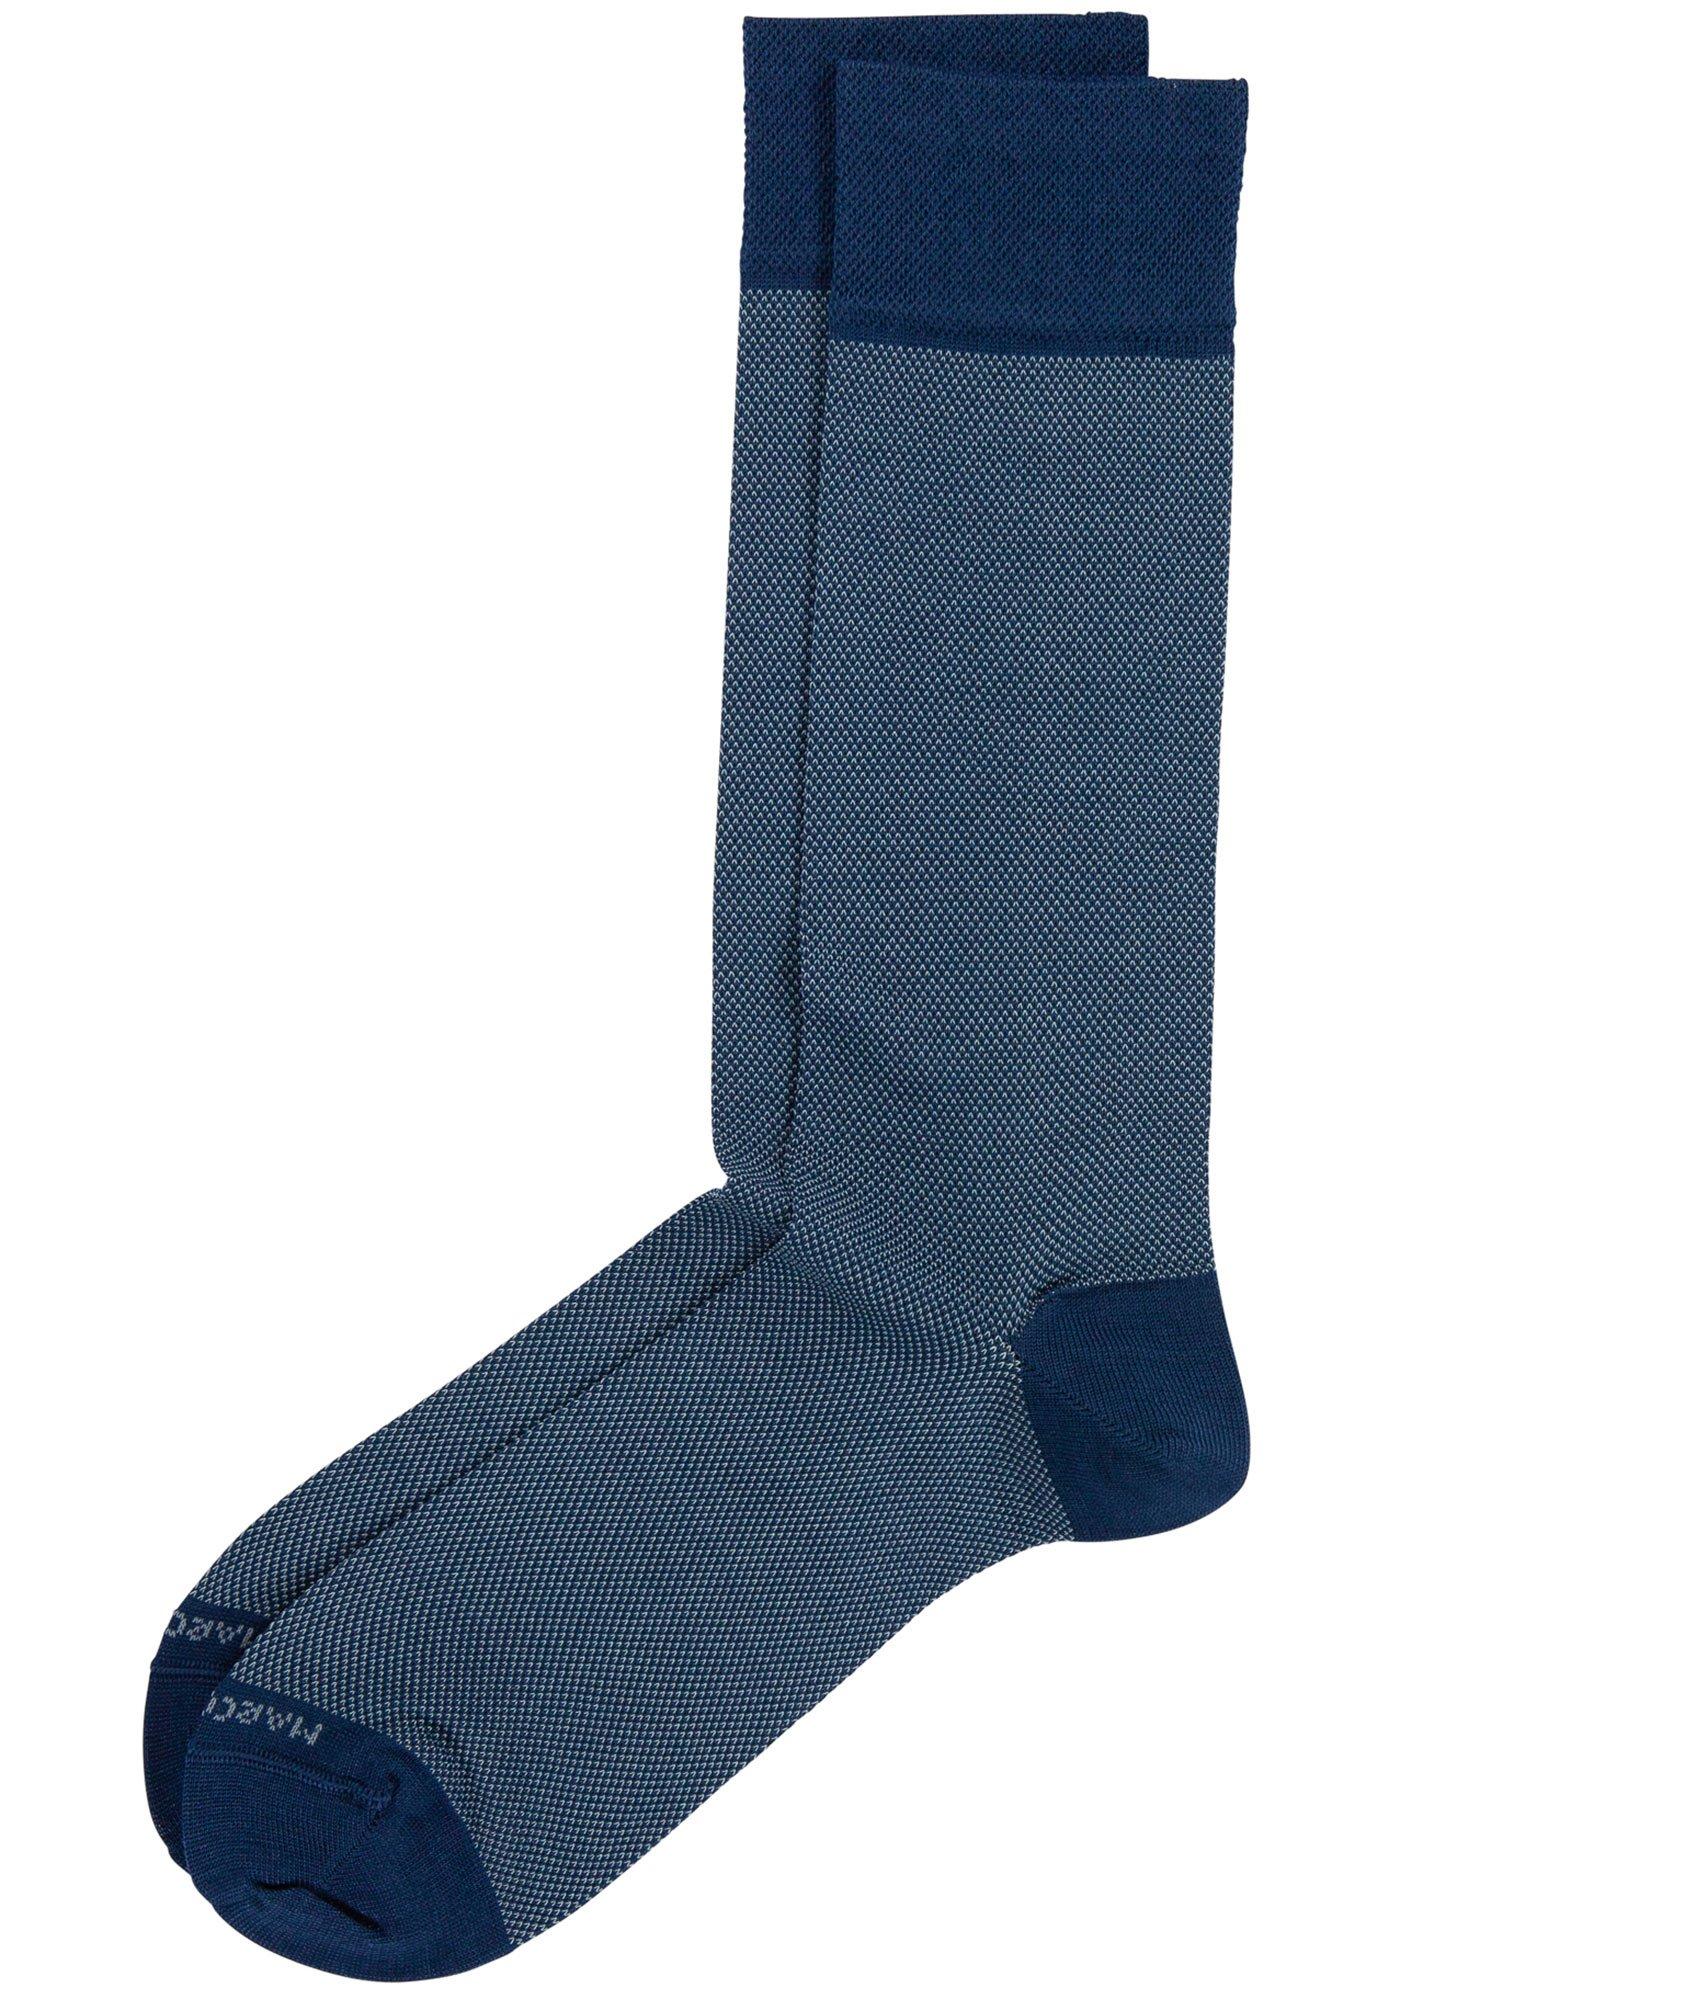 Printed Socks image 0